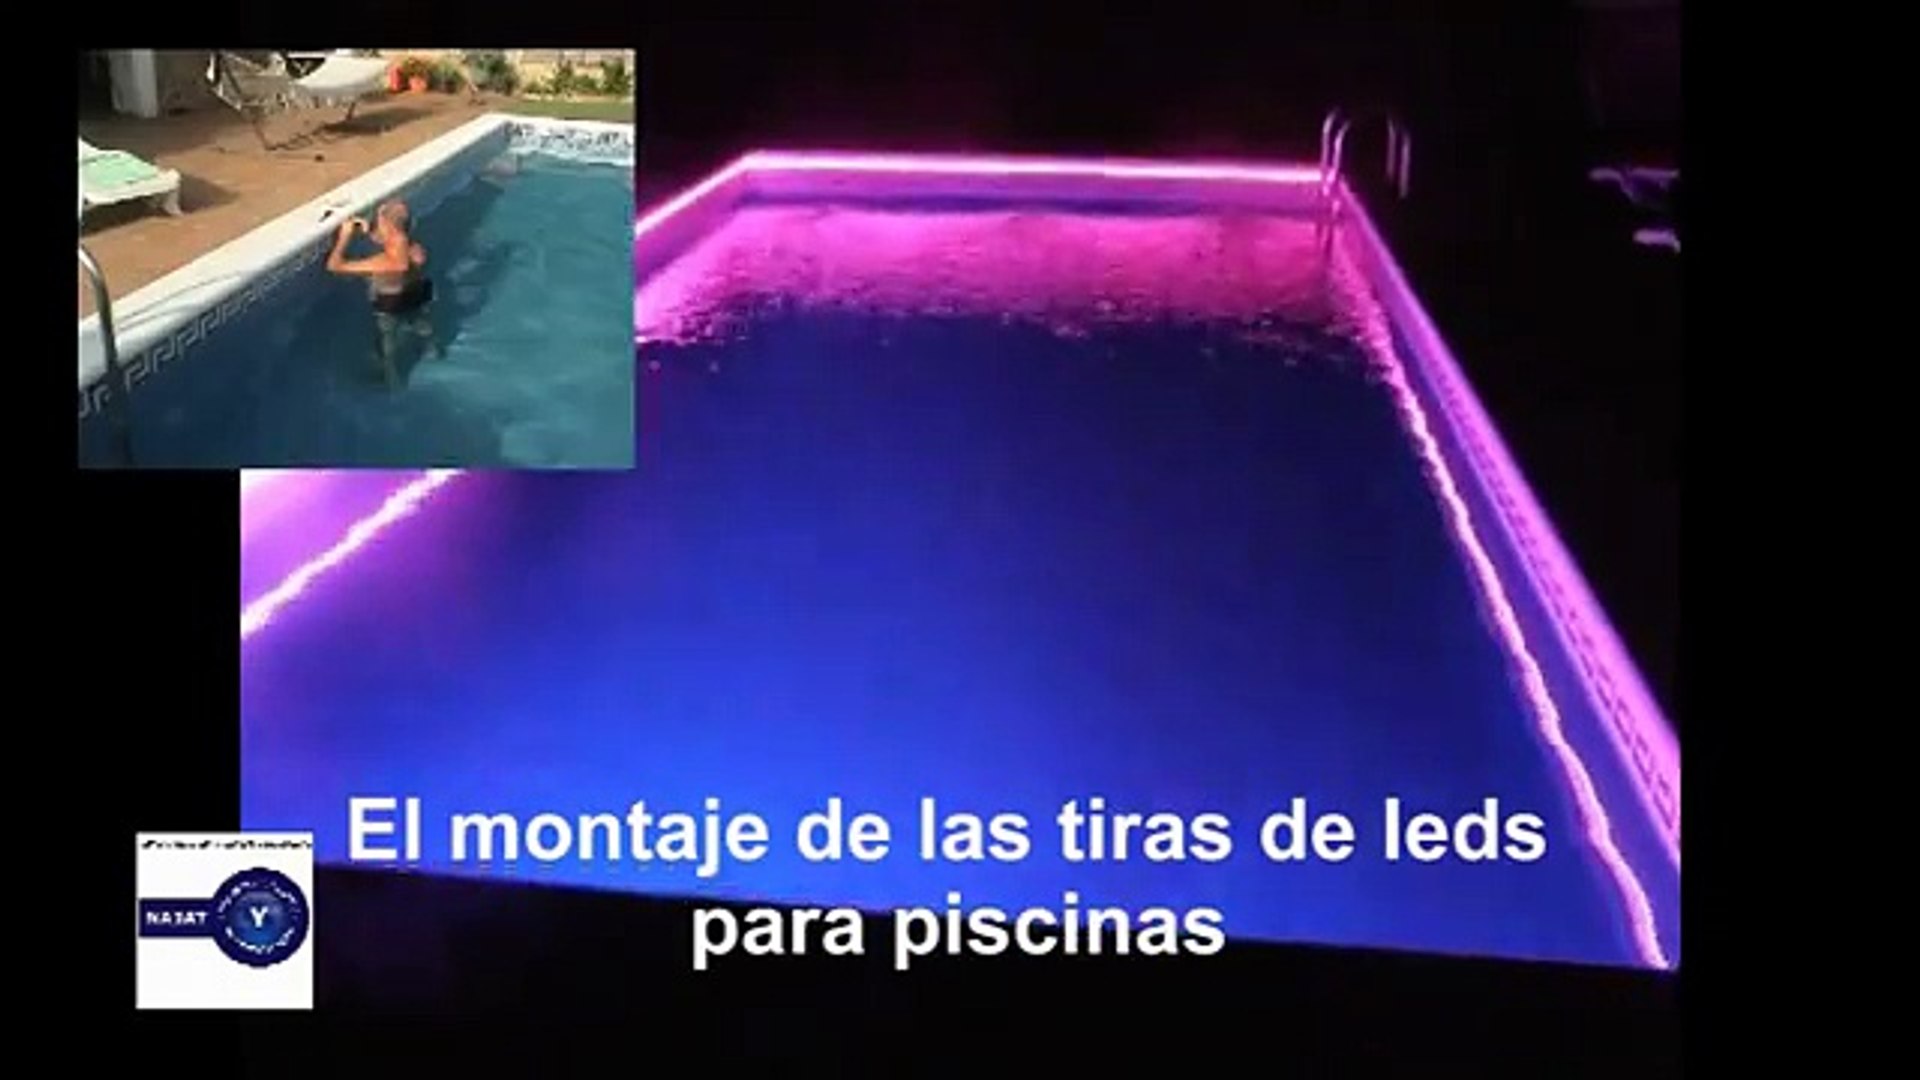 Iluminacion de Leds para piscinas - video Dailymotion